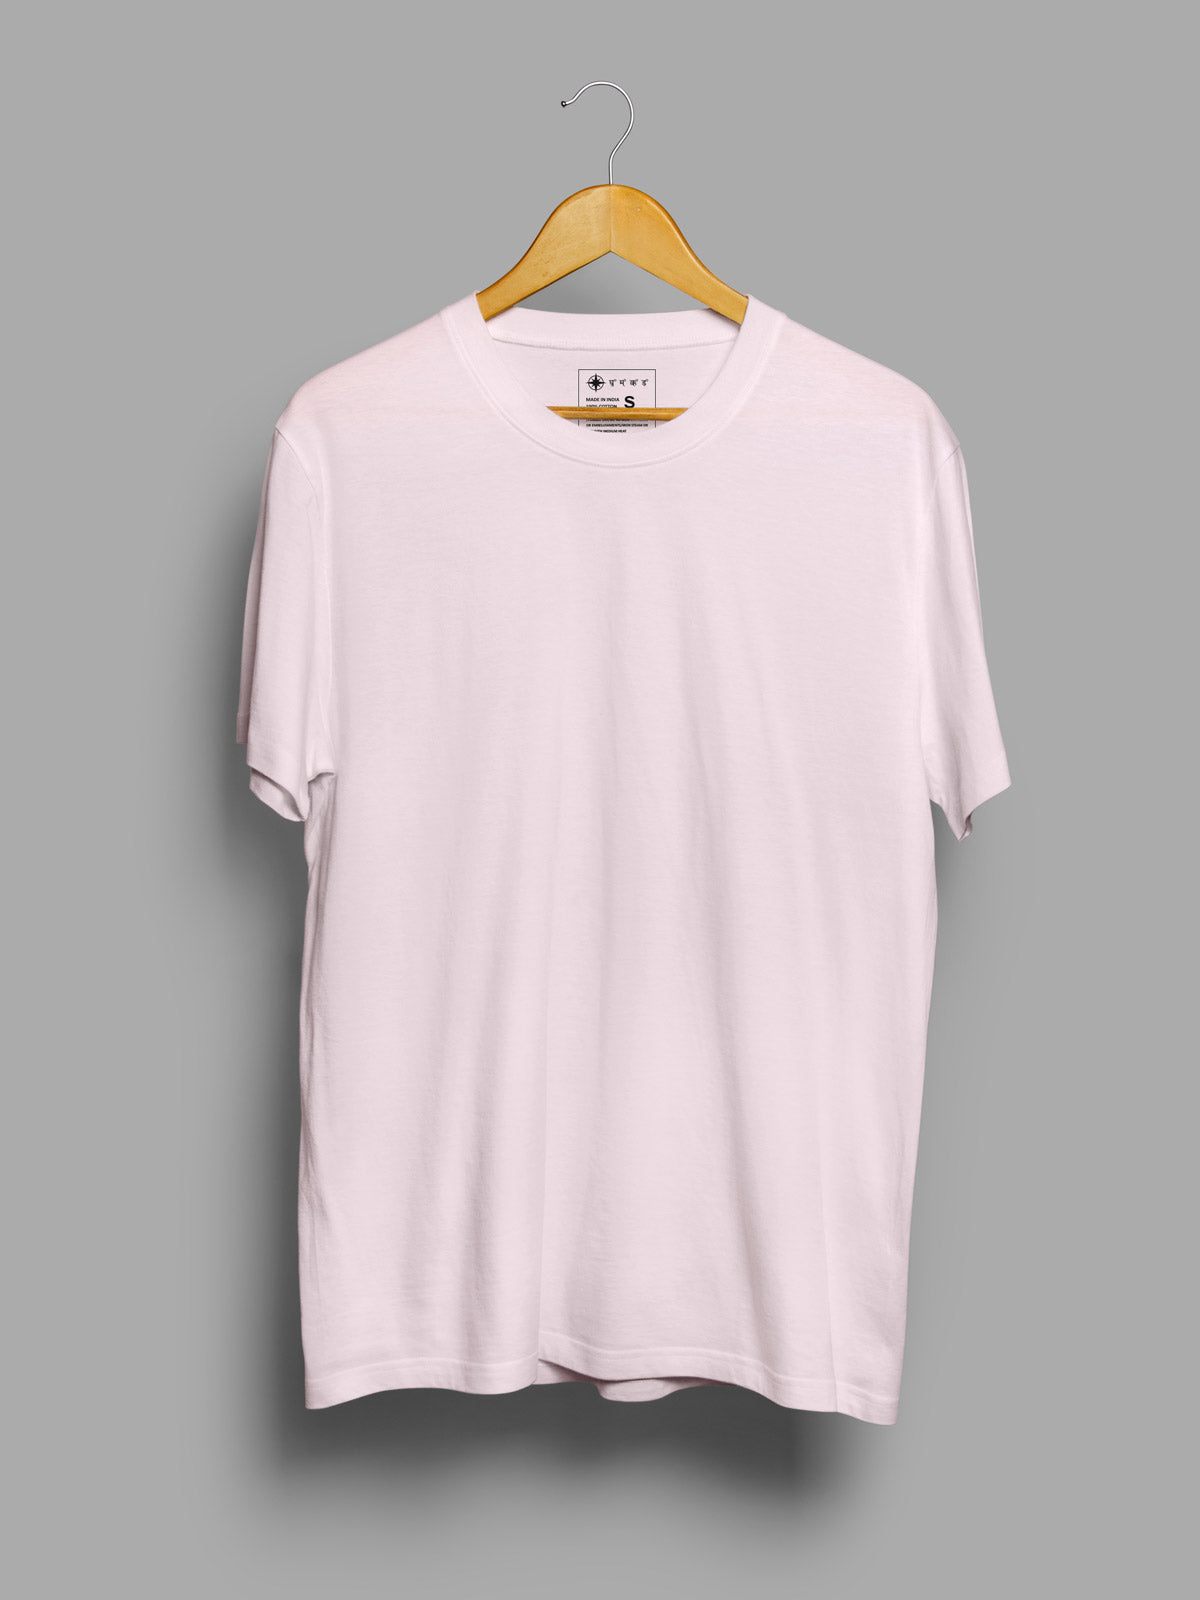 Soft Pink & Dark Grey | Unisex Plain T shirt Combo by shopghumakkad